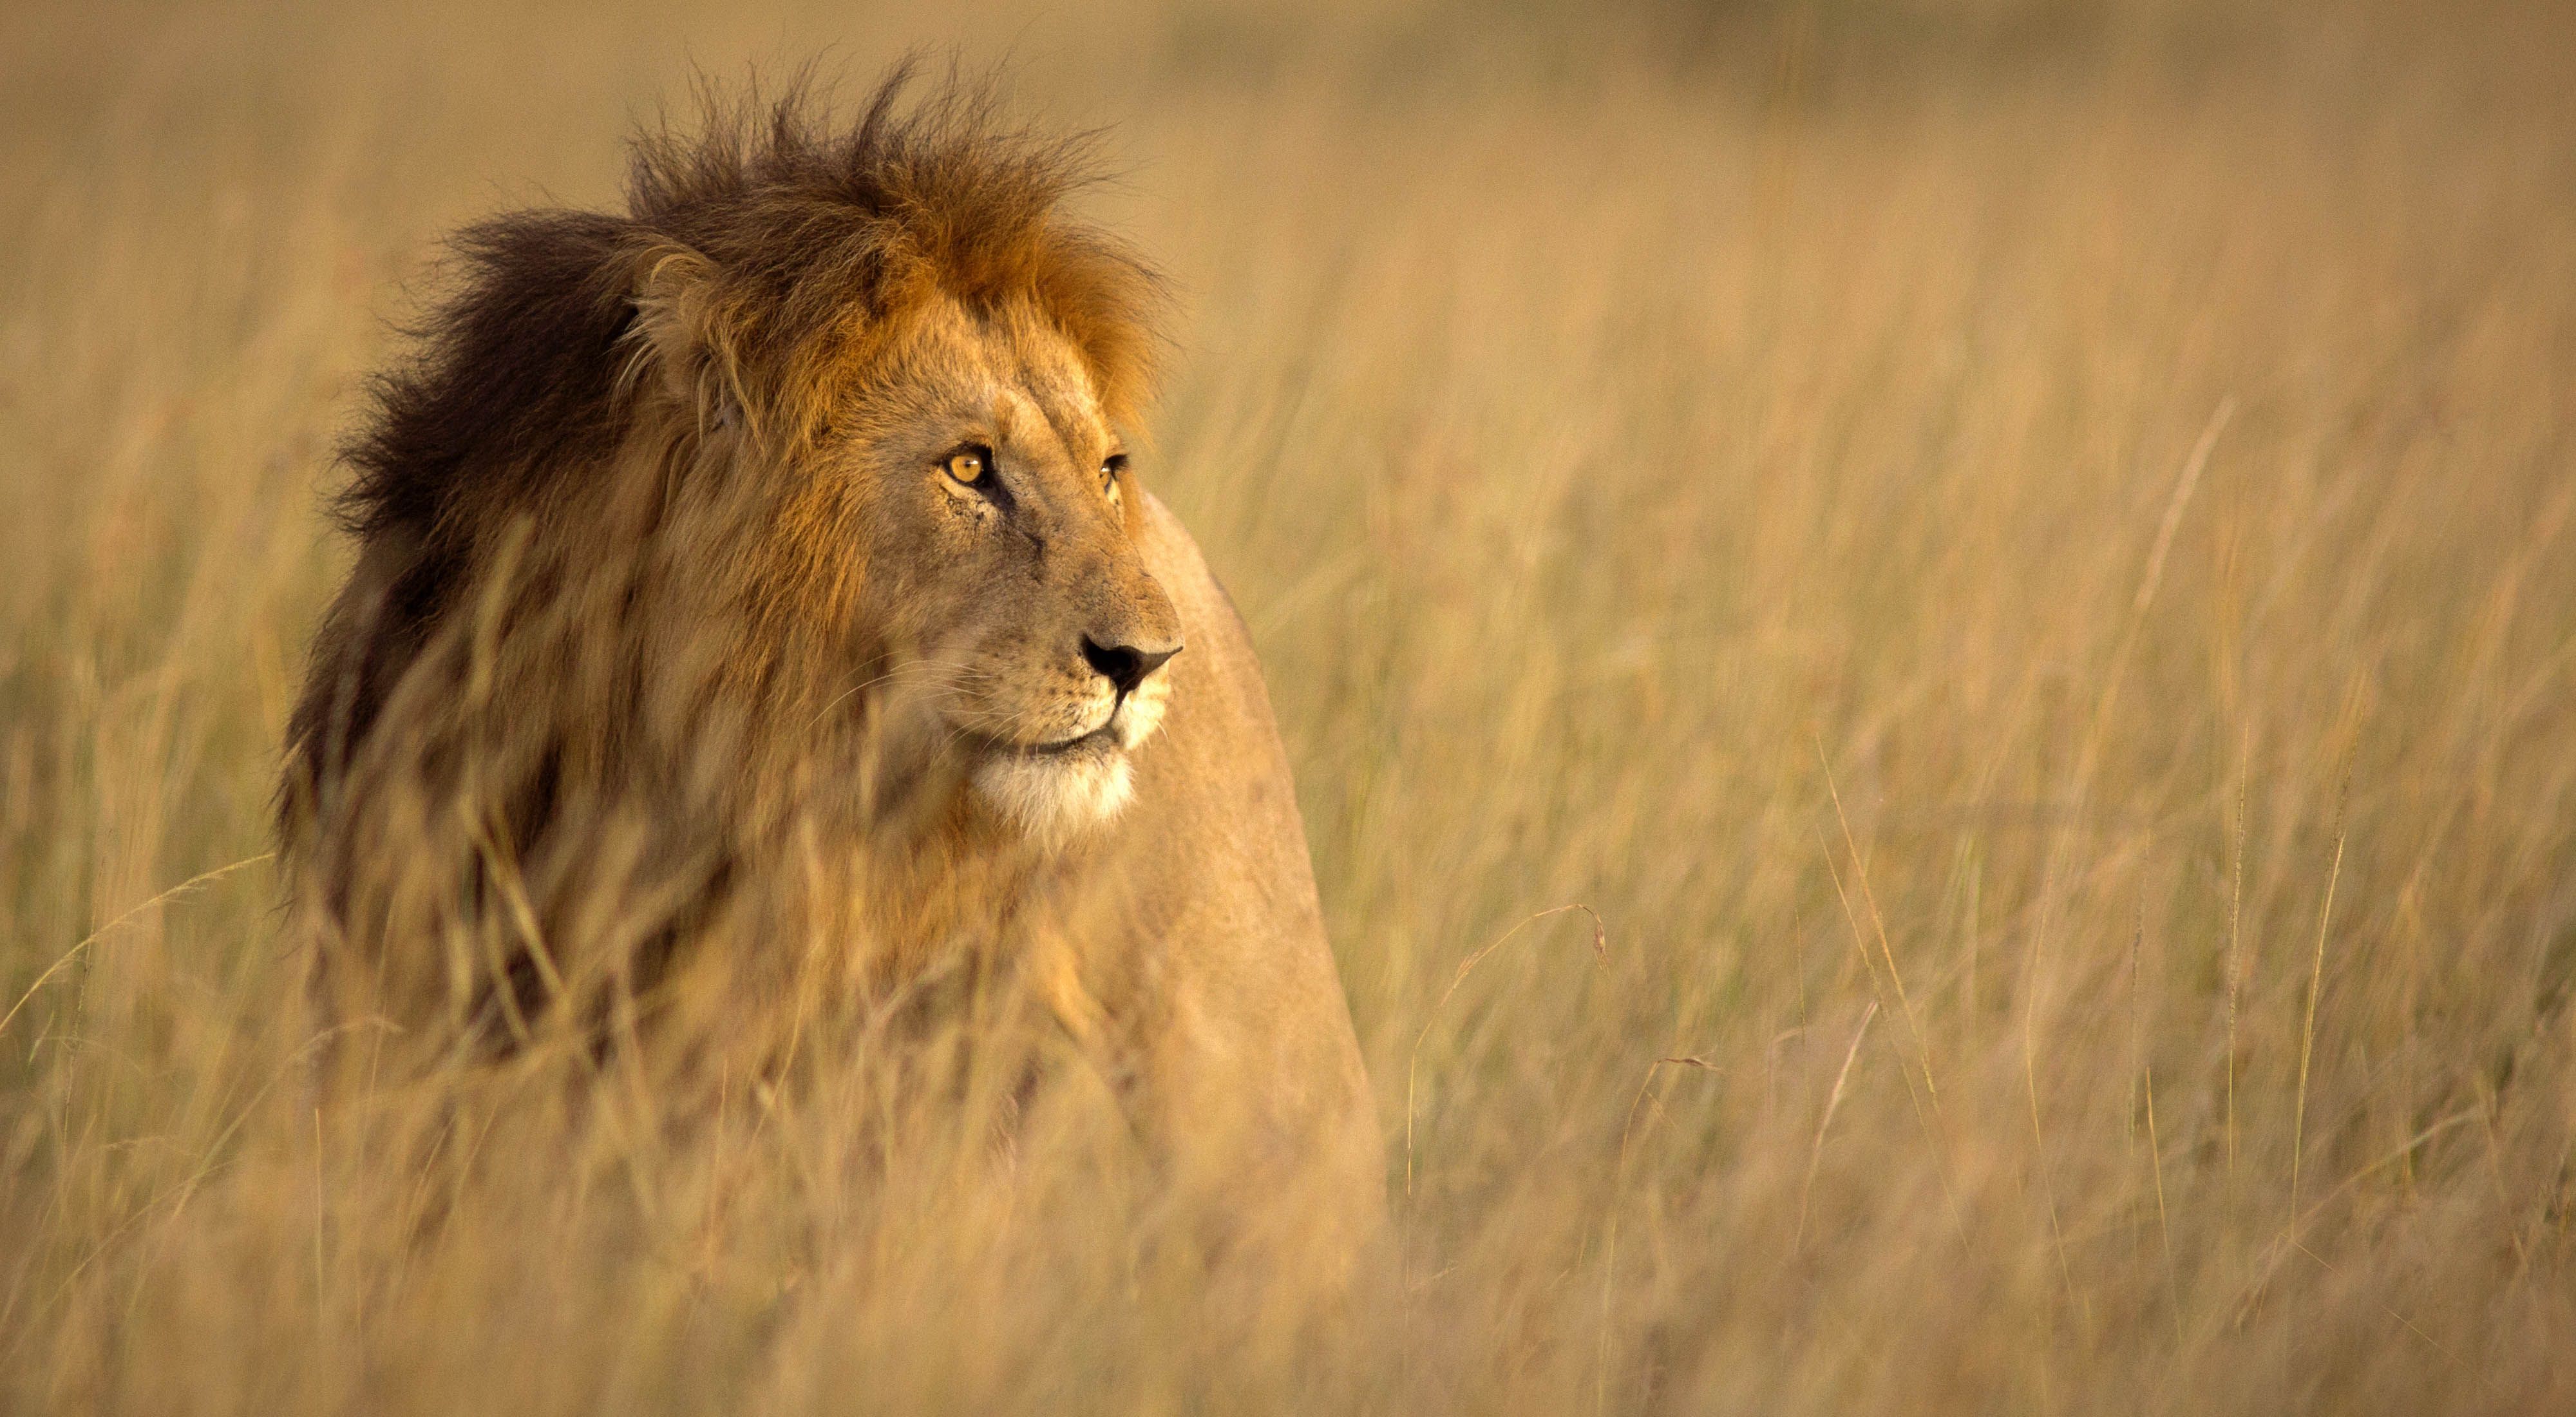 Large male lion in high grass and warm evening light  in Masai Mara, Kenya.